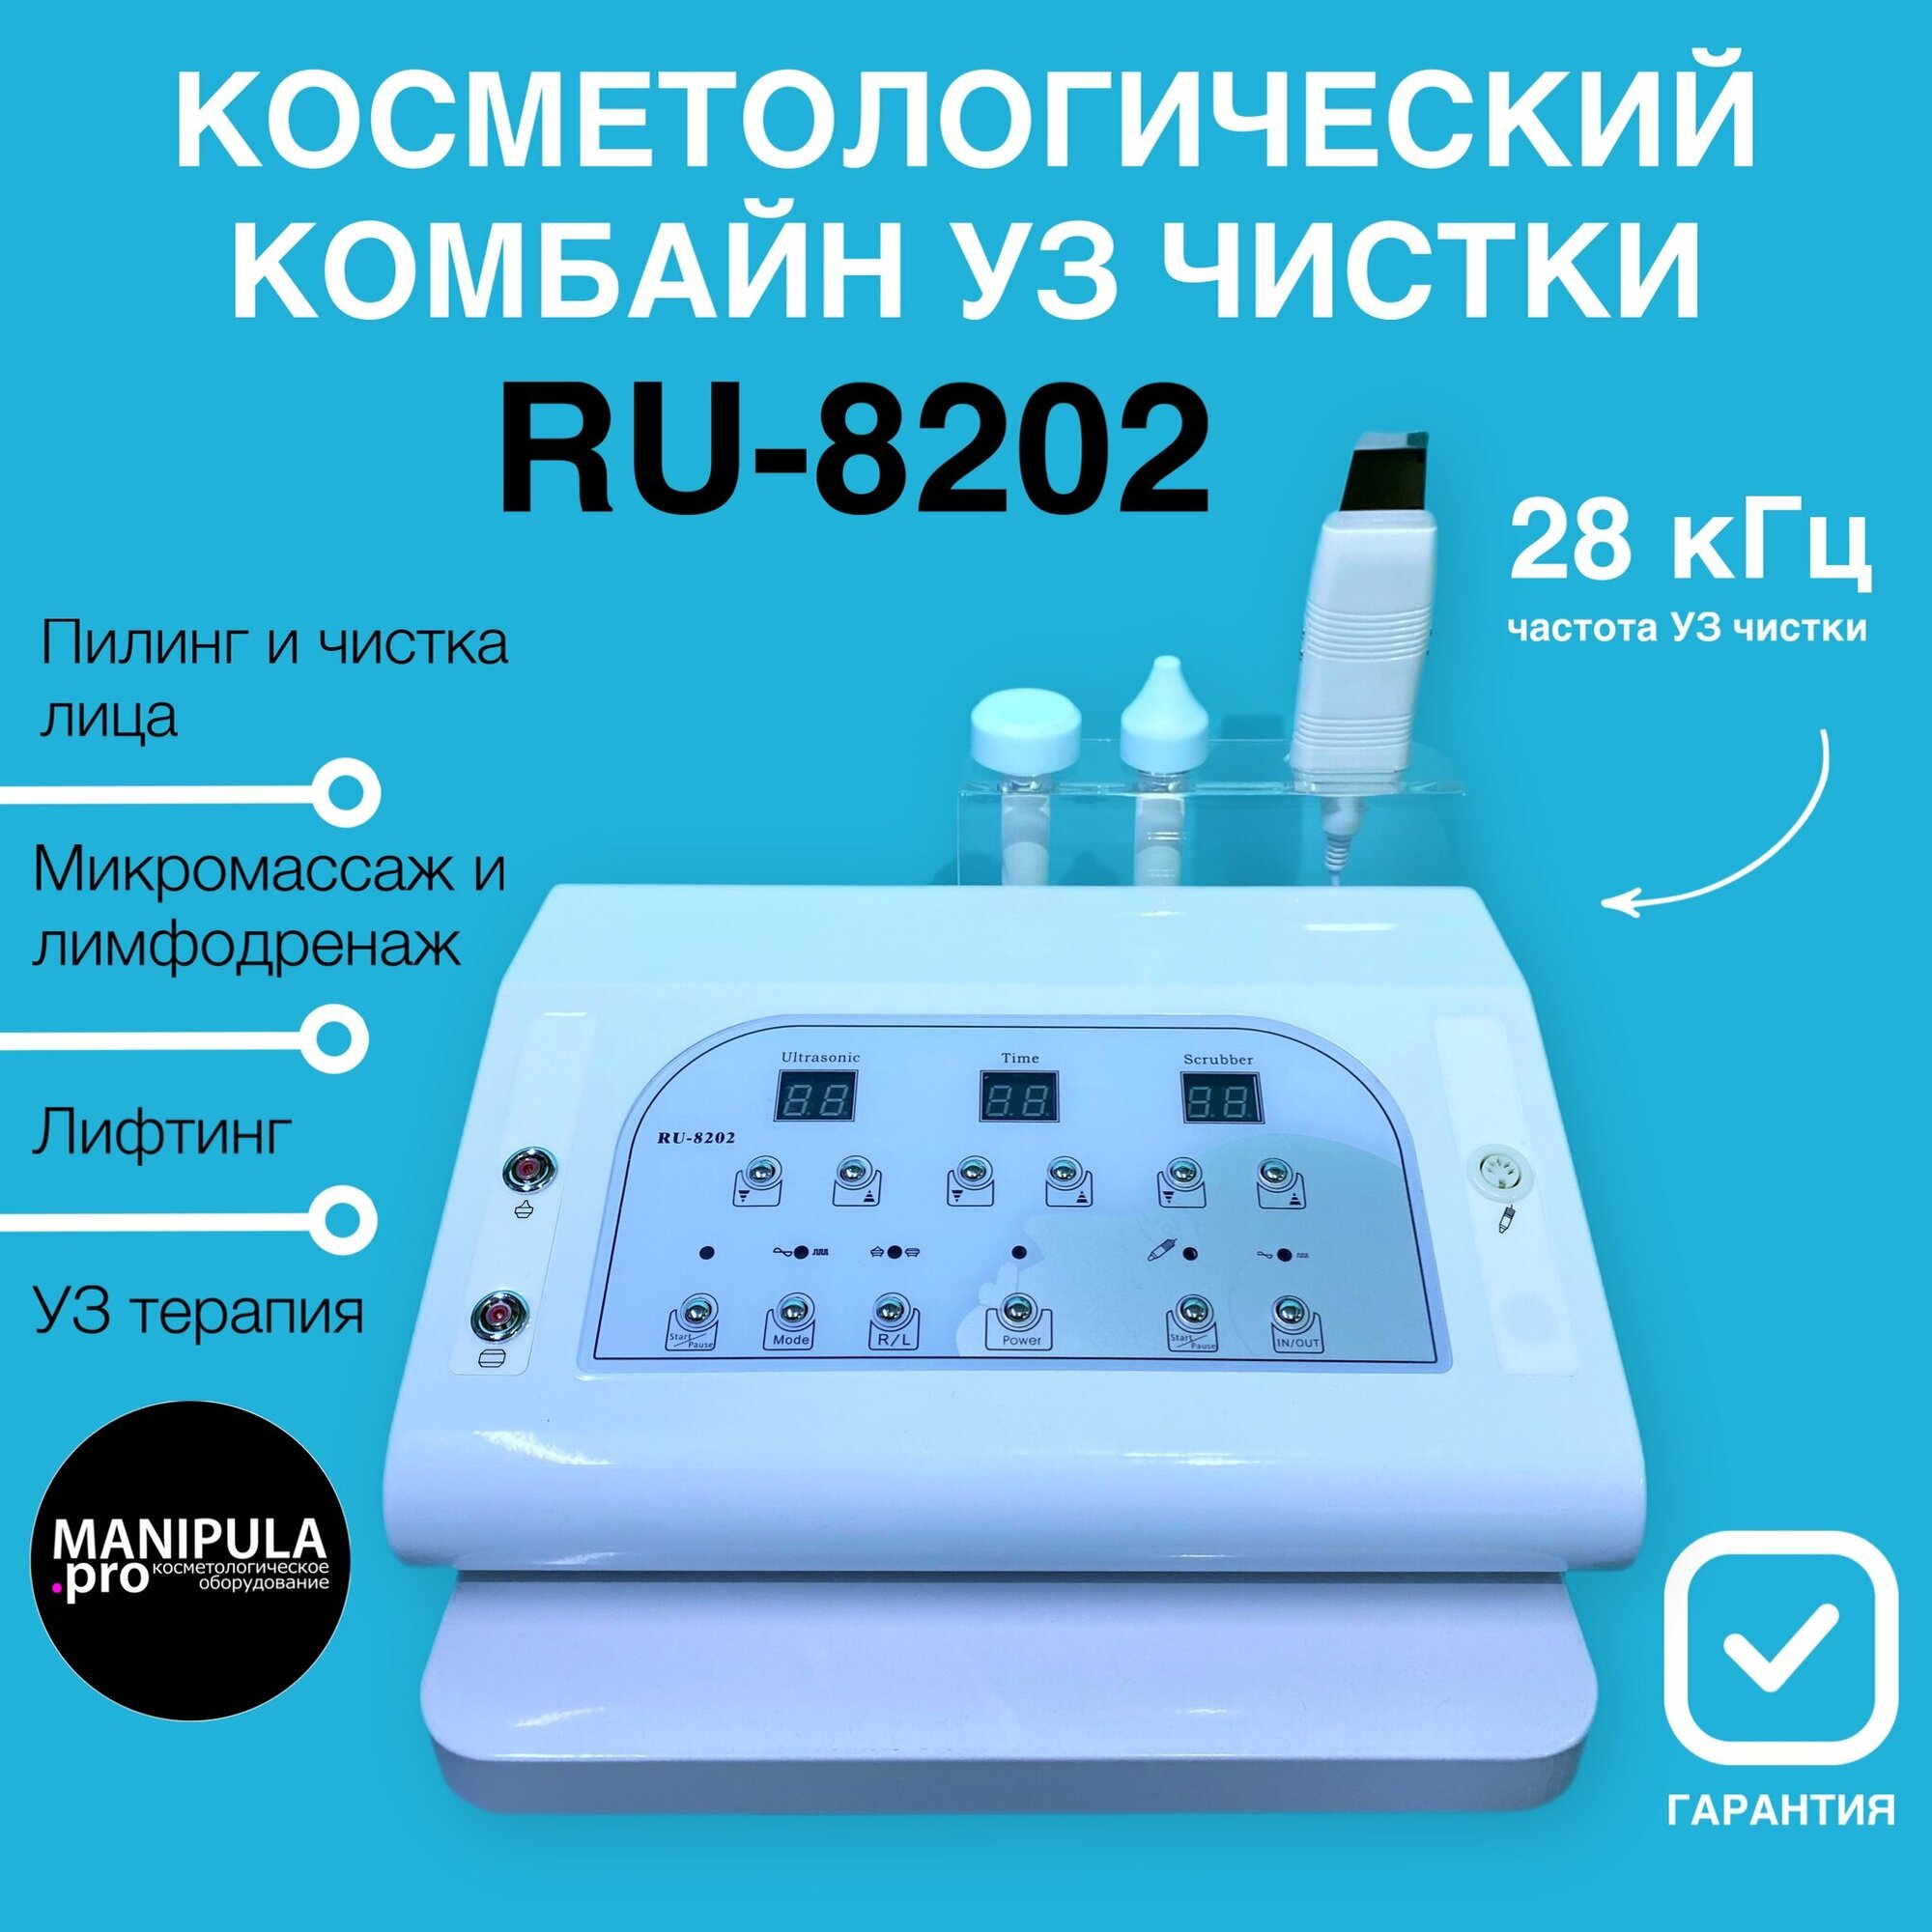 Косметологический комбайн RU-8202 УЗ чистки